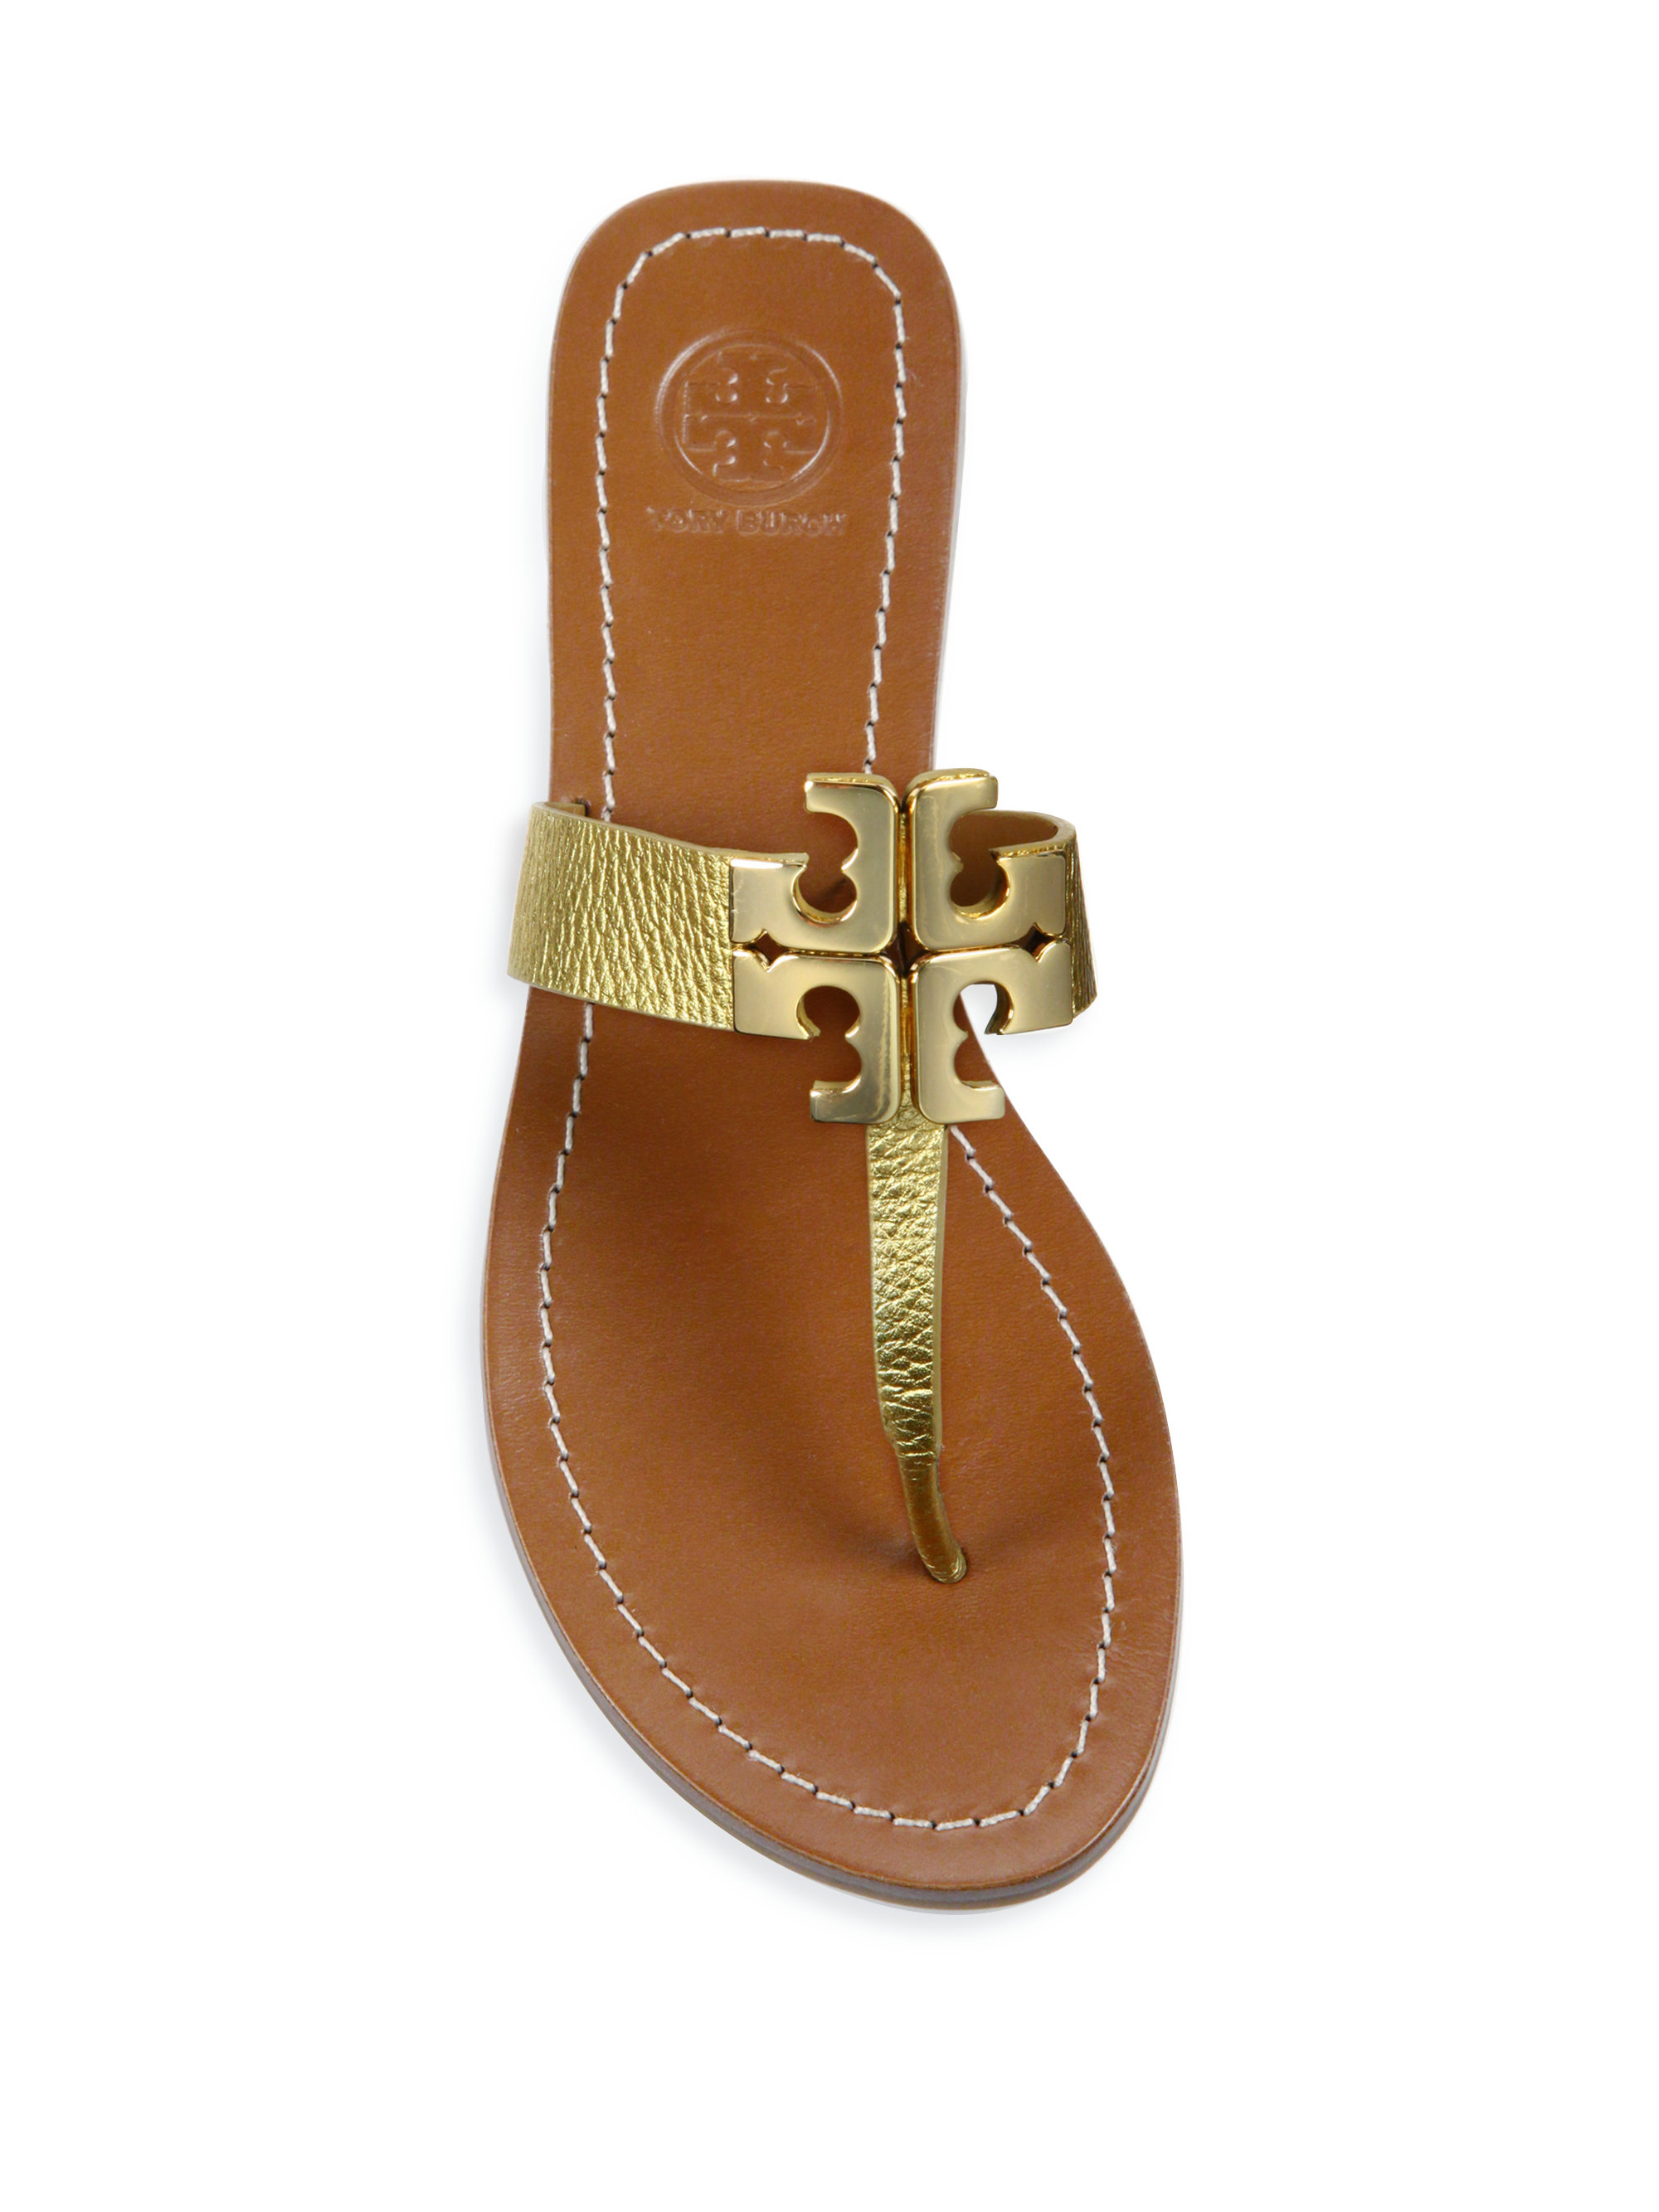 Tory burch Moore Ii Metallic Leather Thong Sandals in Metallic | Lyst